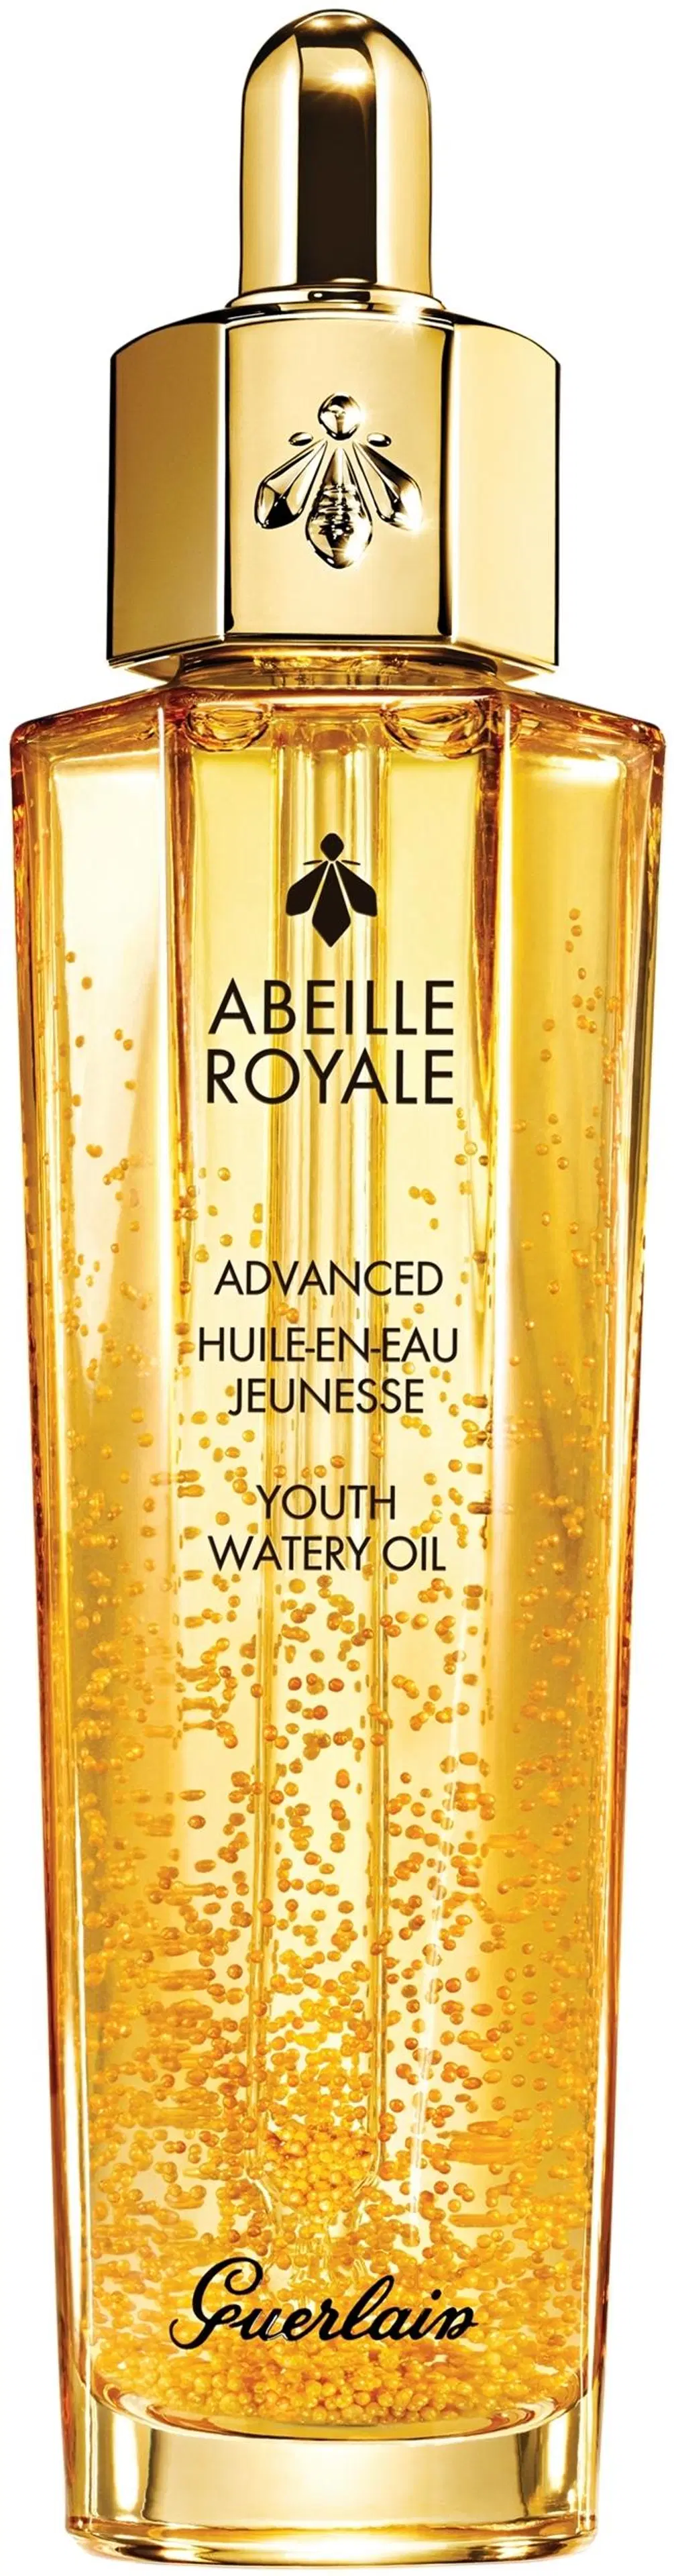 Guerlain Abeille Royale Advanced Youth Watery Oil kasvoöljy 50 ml